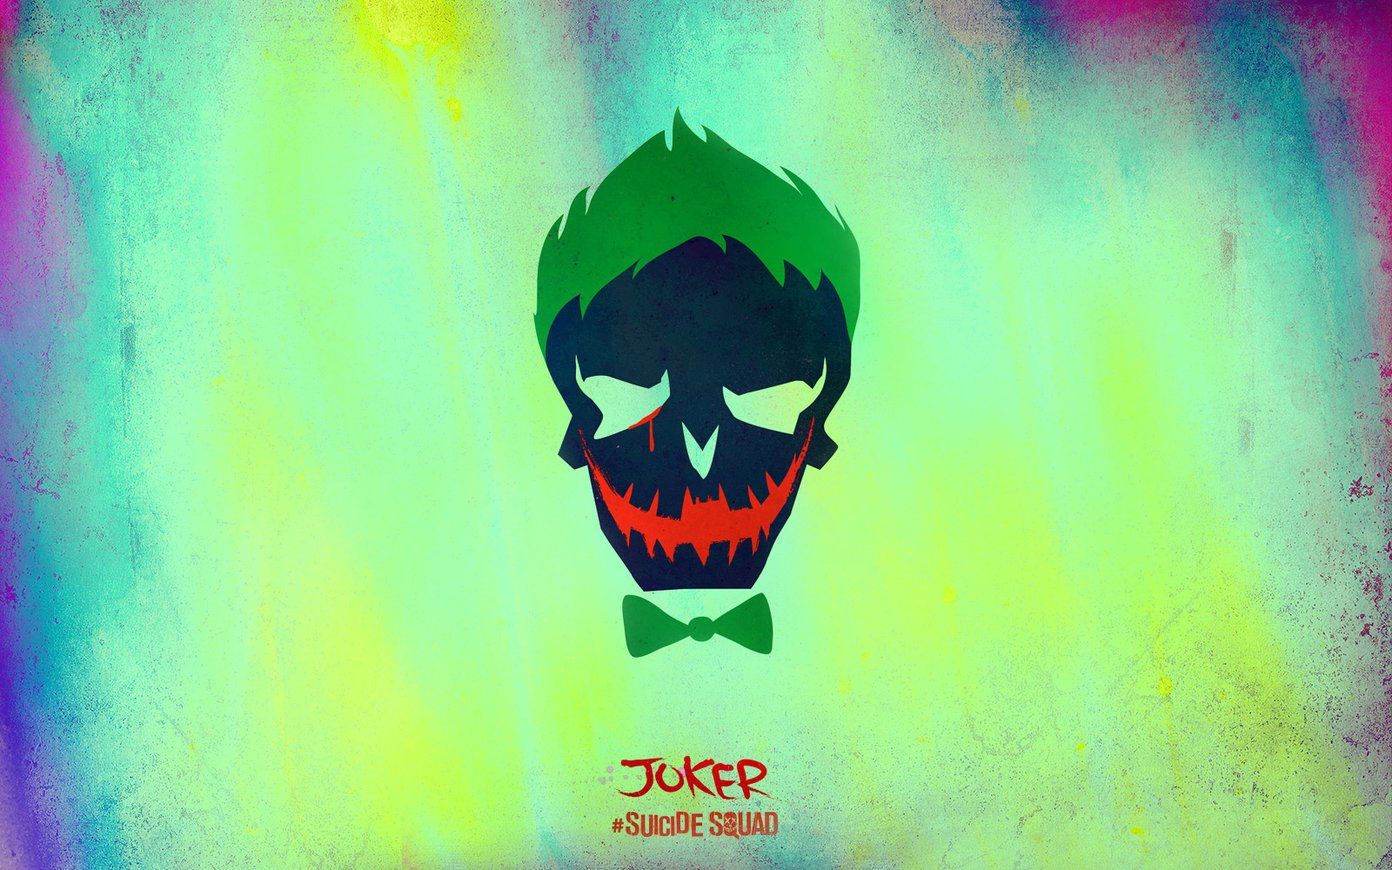 Best The Joker HD Wallpaper That You Can Download